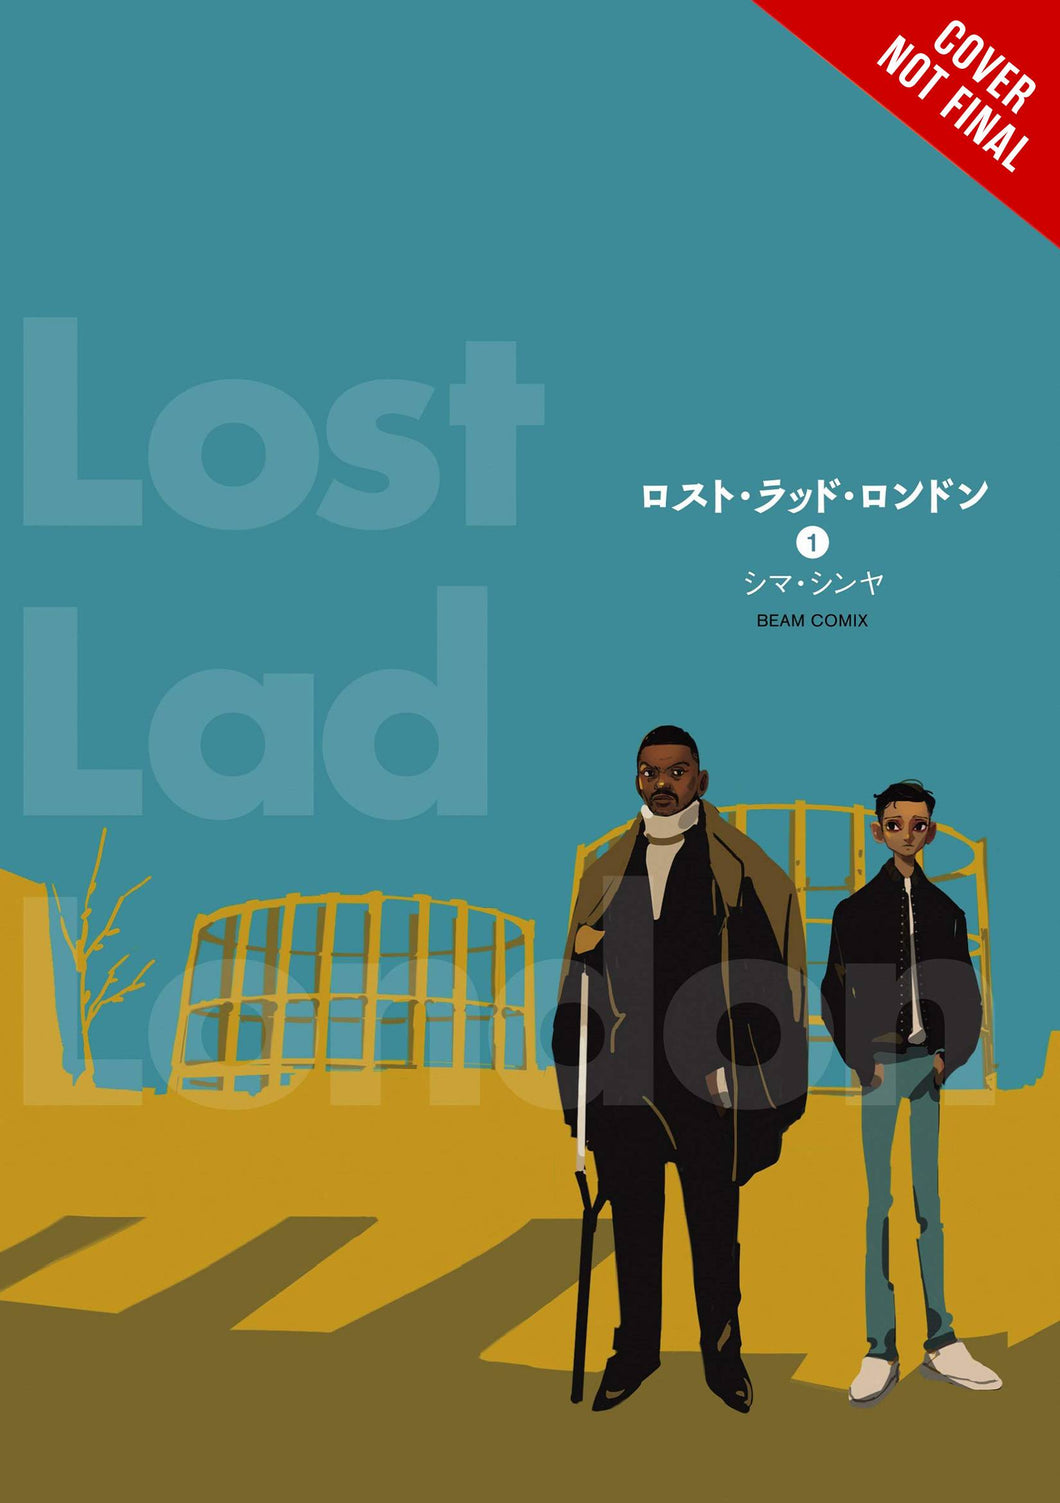 Lost Lad London GN Vol 01 - Books